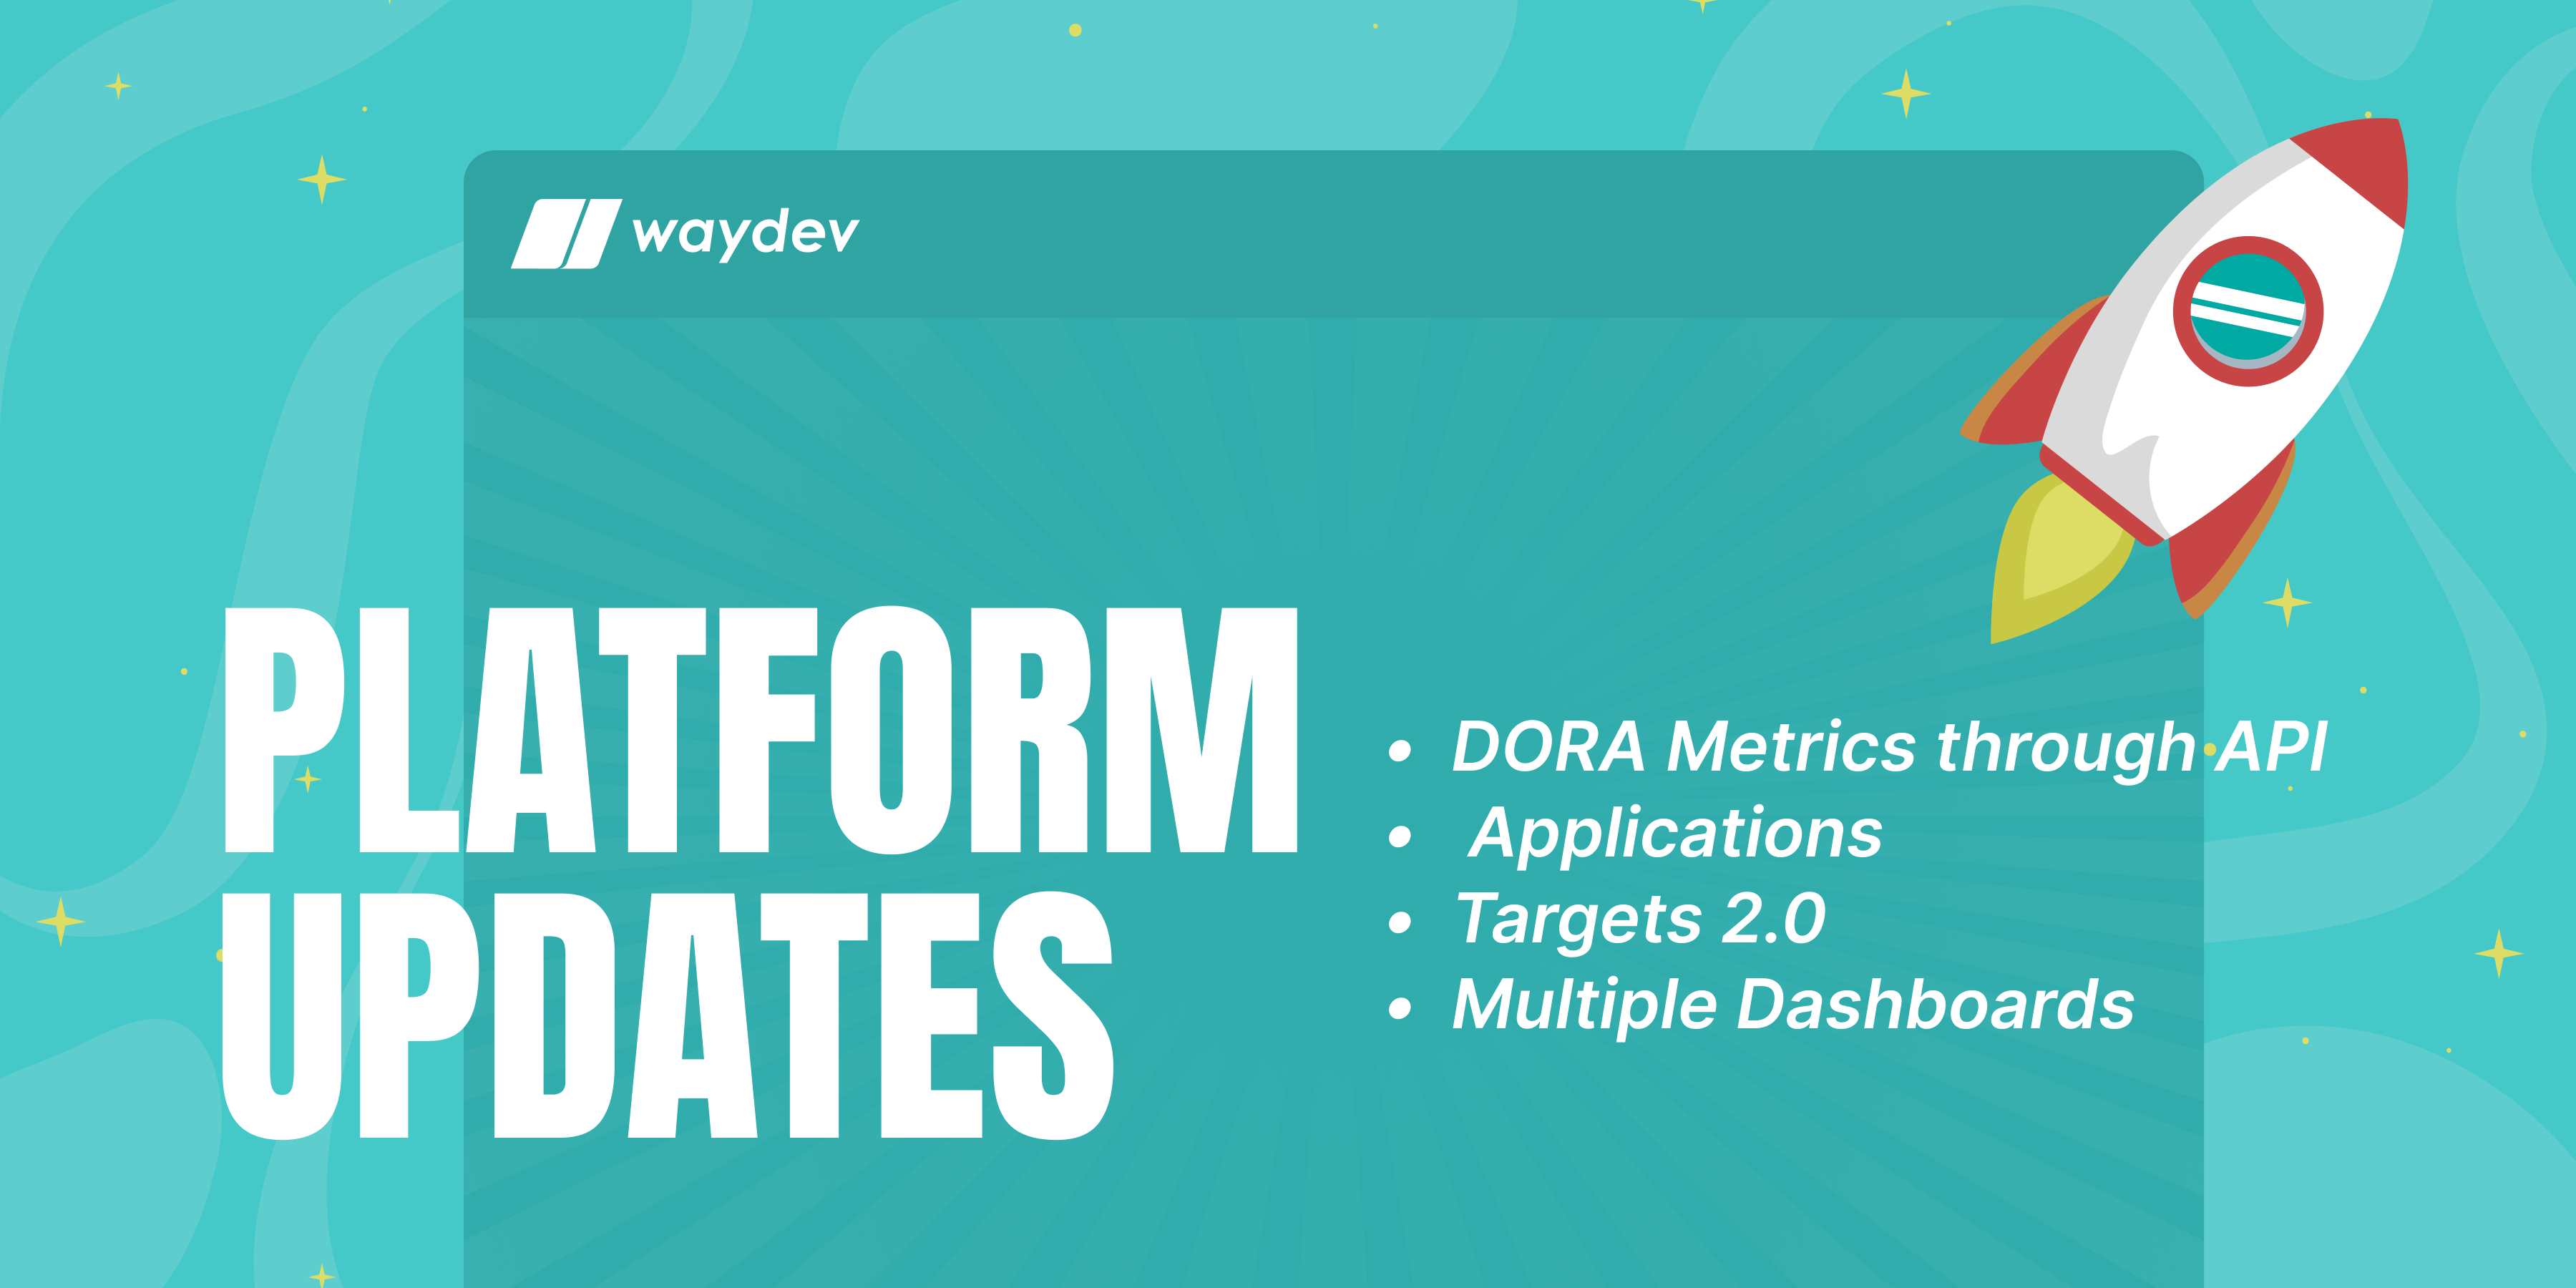 Platform Updates: DORA Metrics through API, Applications, Targets 2.0, Multiple Dashboards